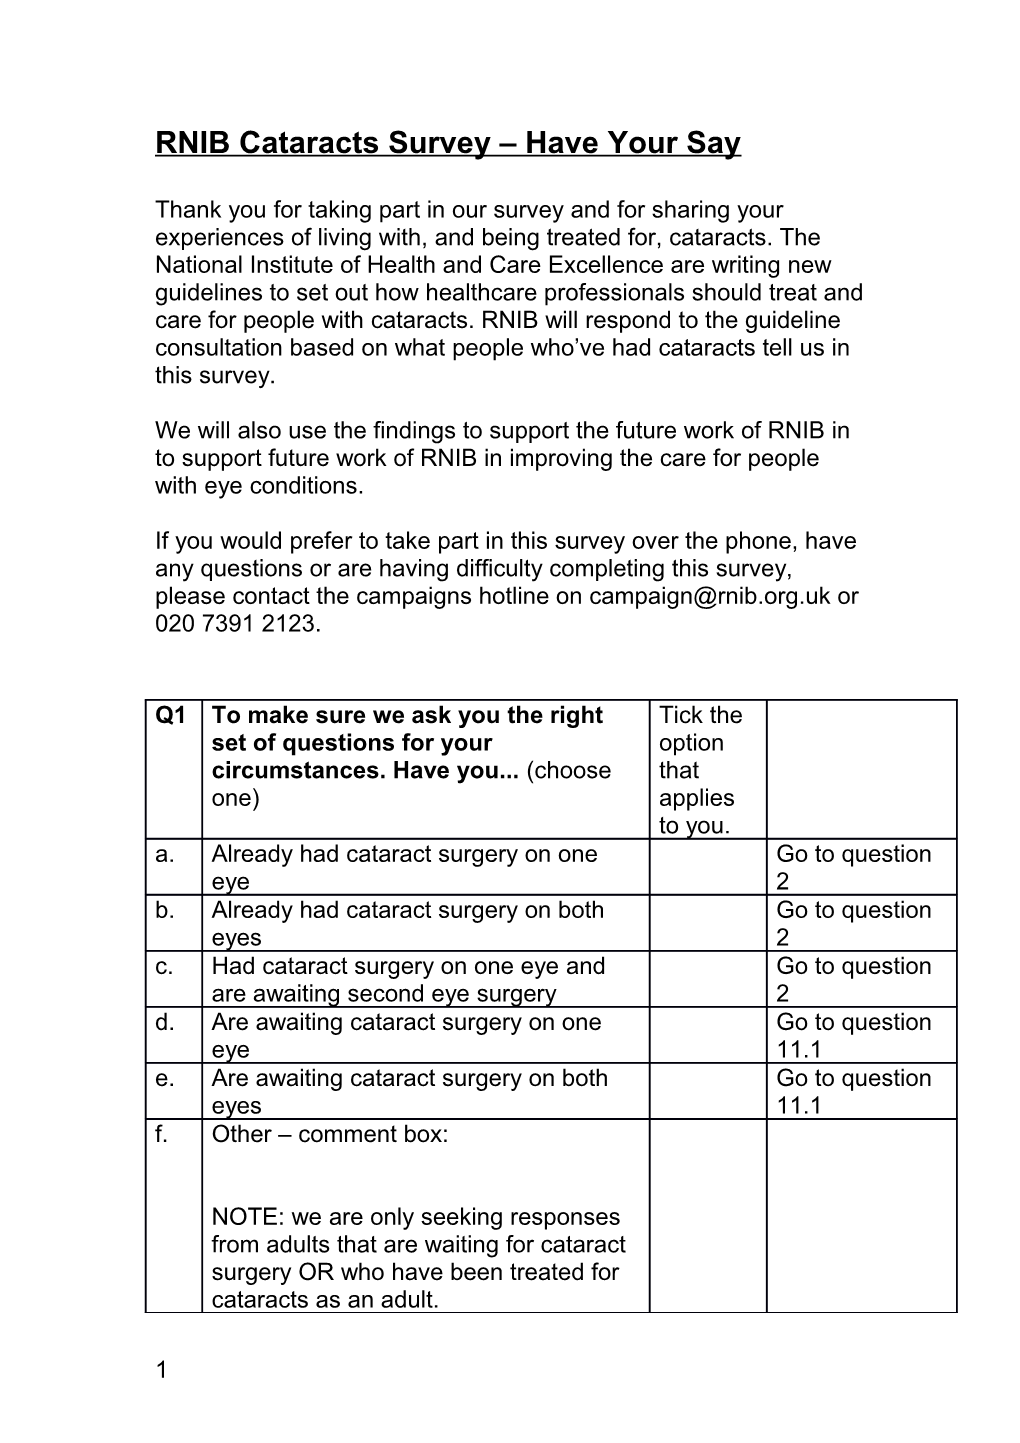 RNIB Cataracts Survey Have Your Say